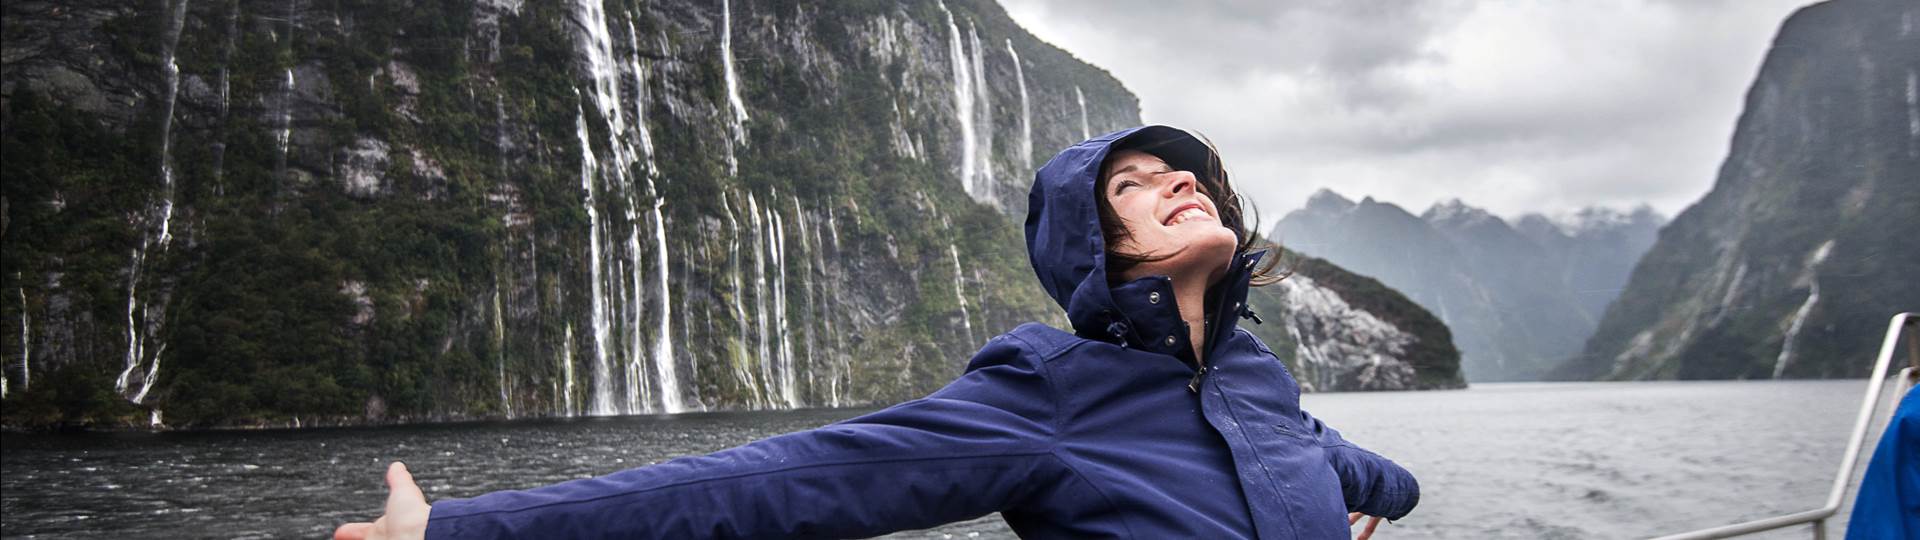 Woman enjoying the waterfalls in Fiordland National Park